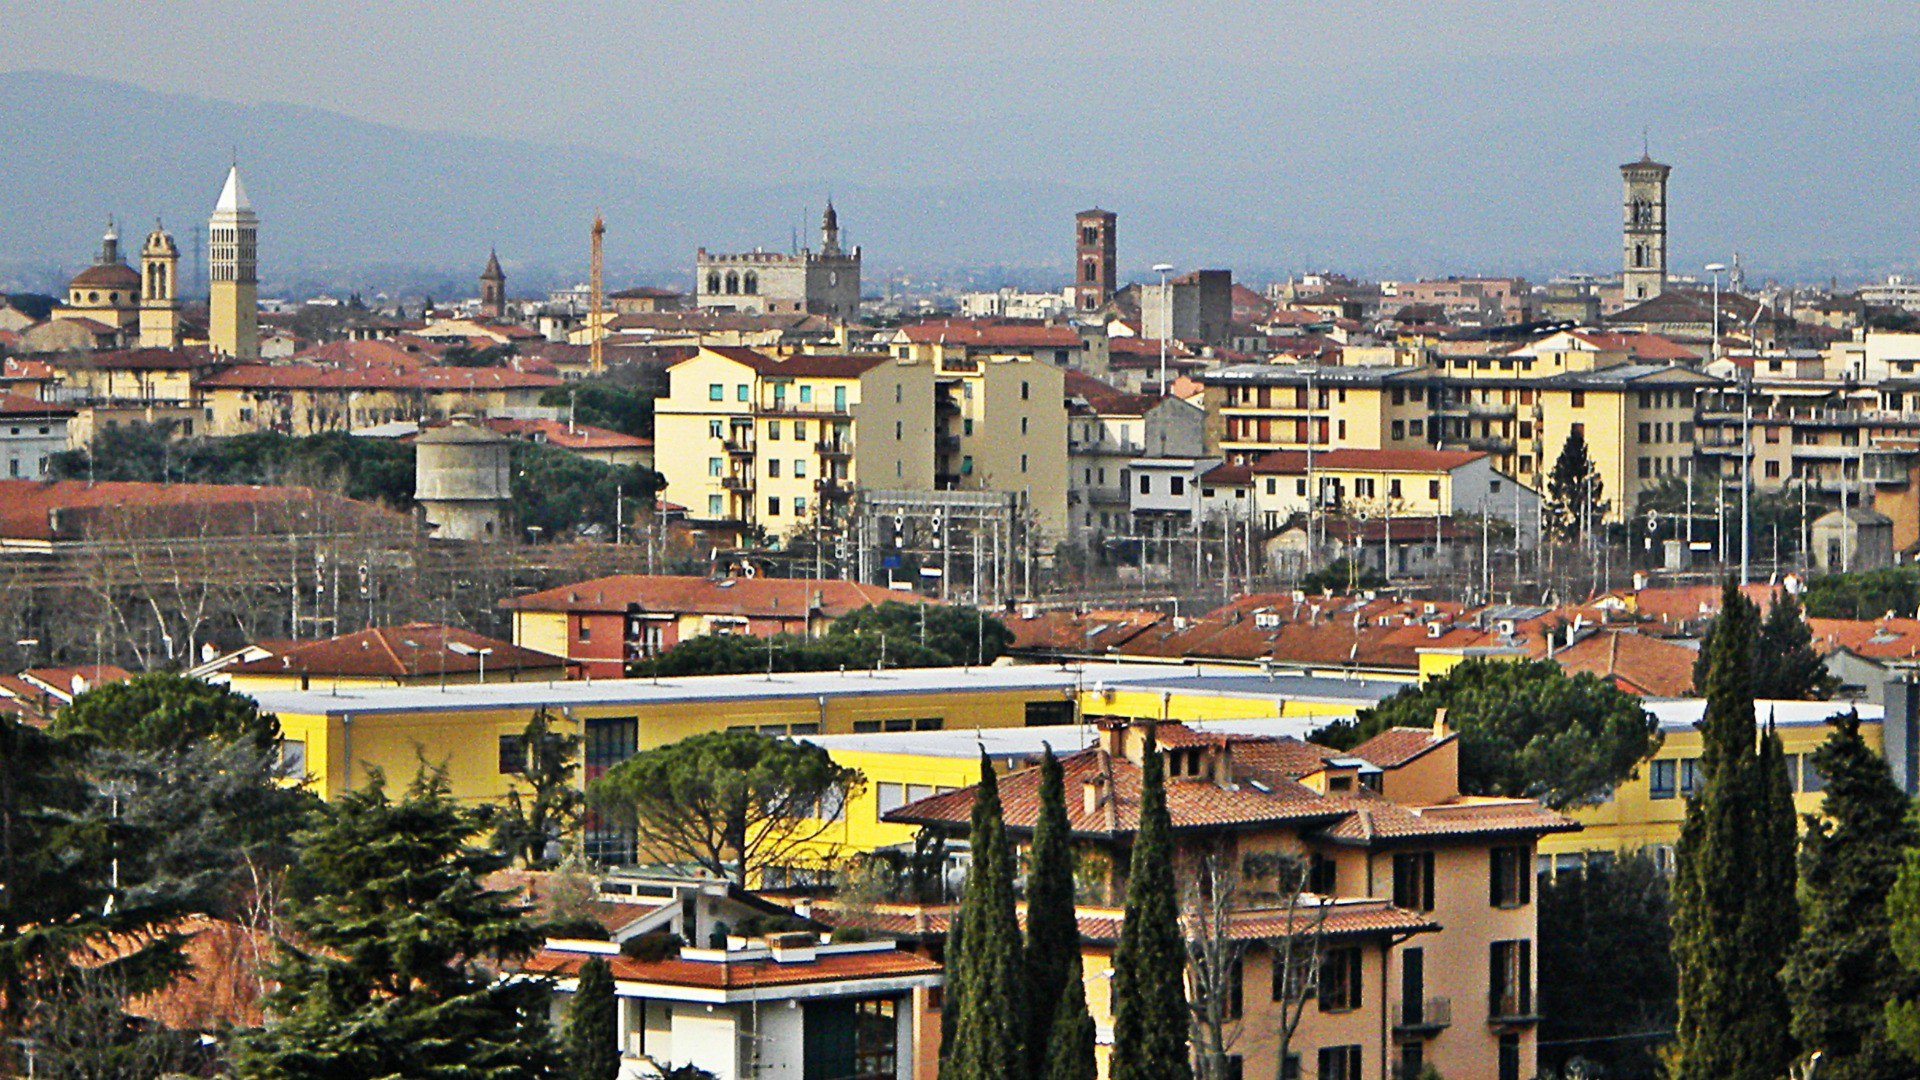 La ville industrielle de Prato en Toscane (Image: Wikipedia / Massimilianogalardi / CC BY-SA 3.0)